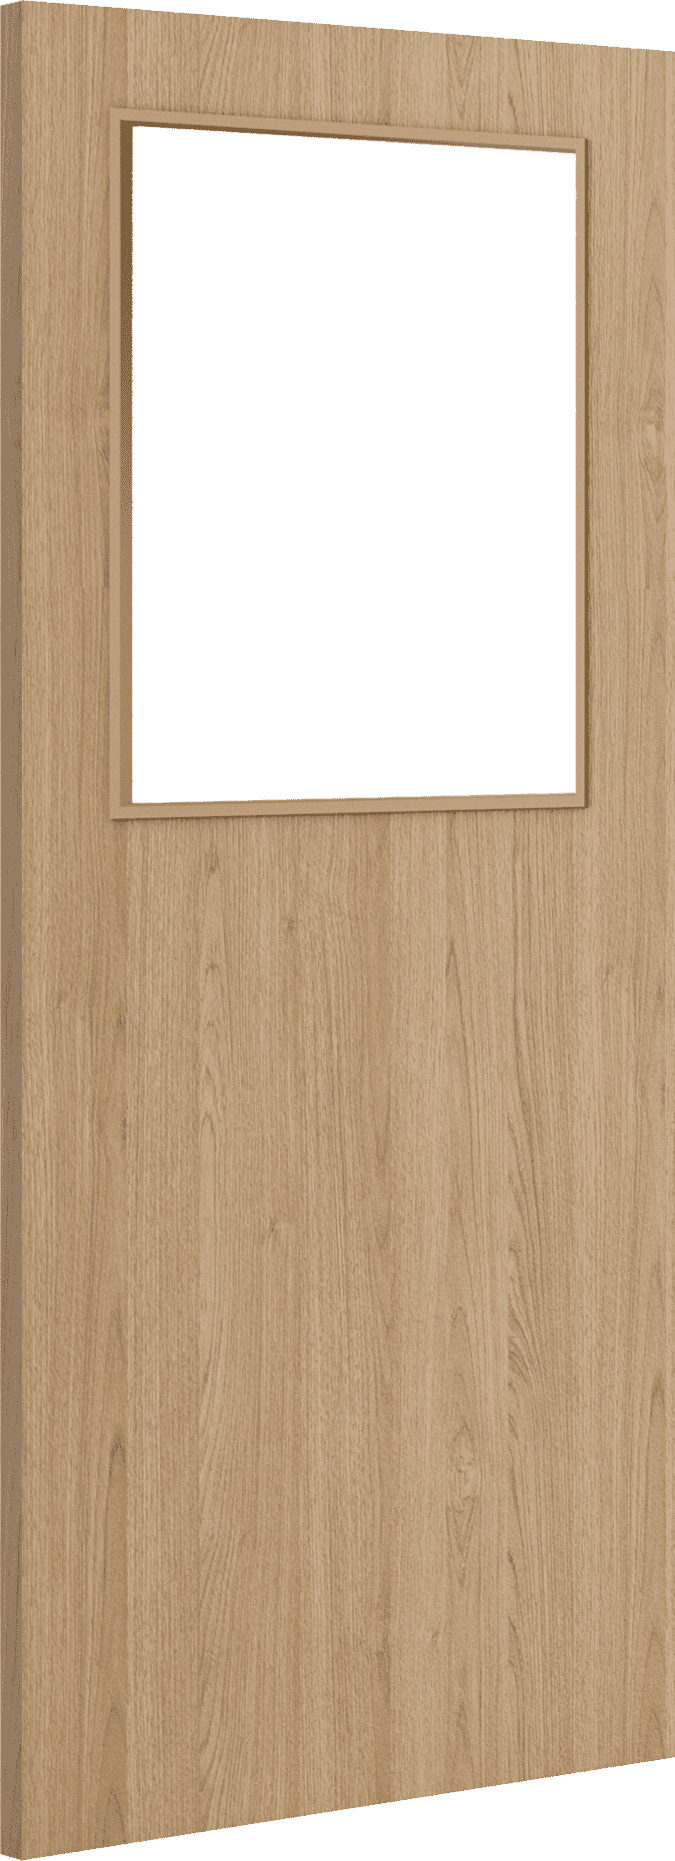 2040mm x 526mm x 44mm Architectural Oak 01 Frosted Glazed - Prefinished FD30 Fire Door Blank